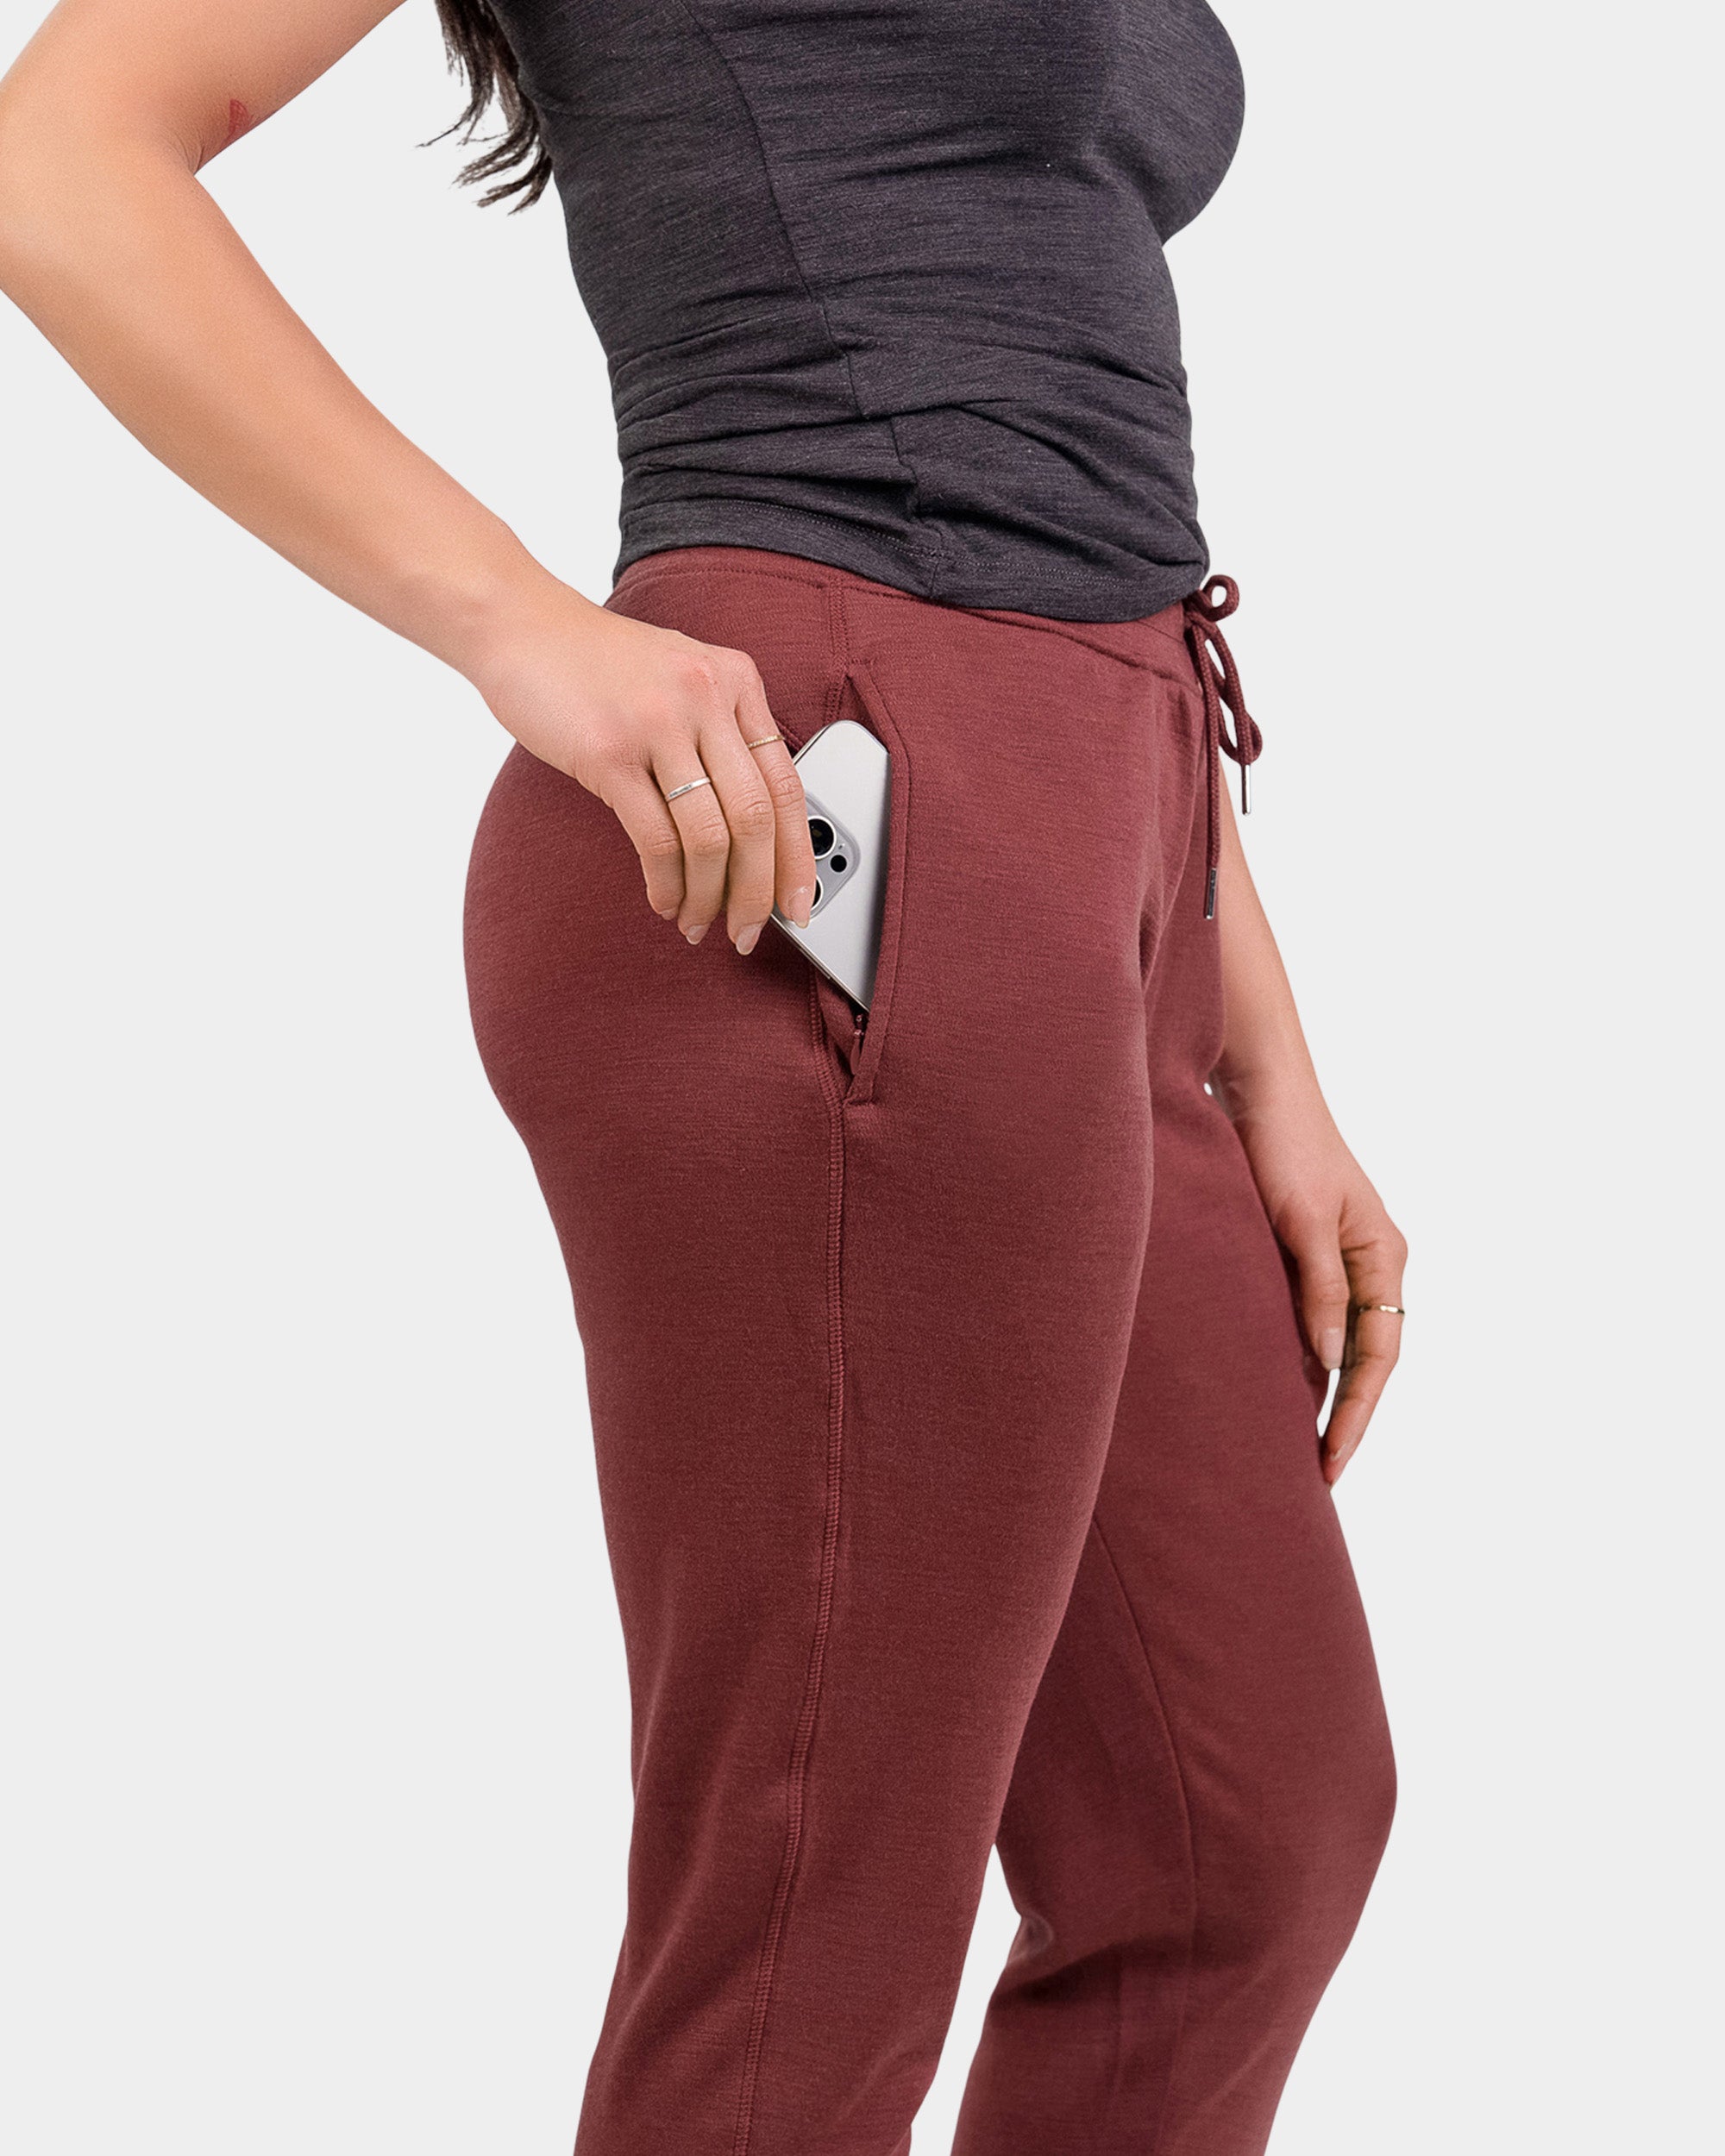 Nike Sportswear Archive Women's Snap Pants Sizes Large Style